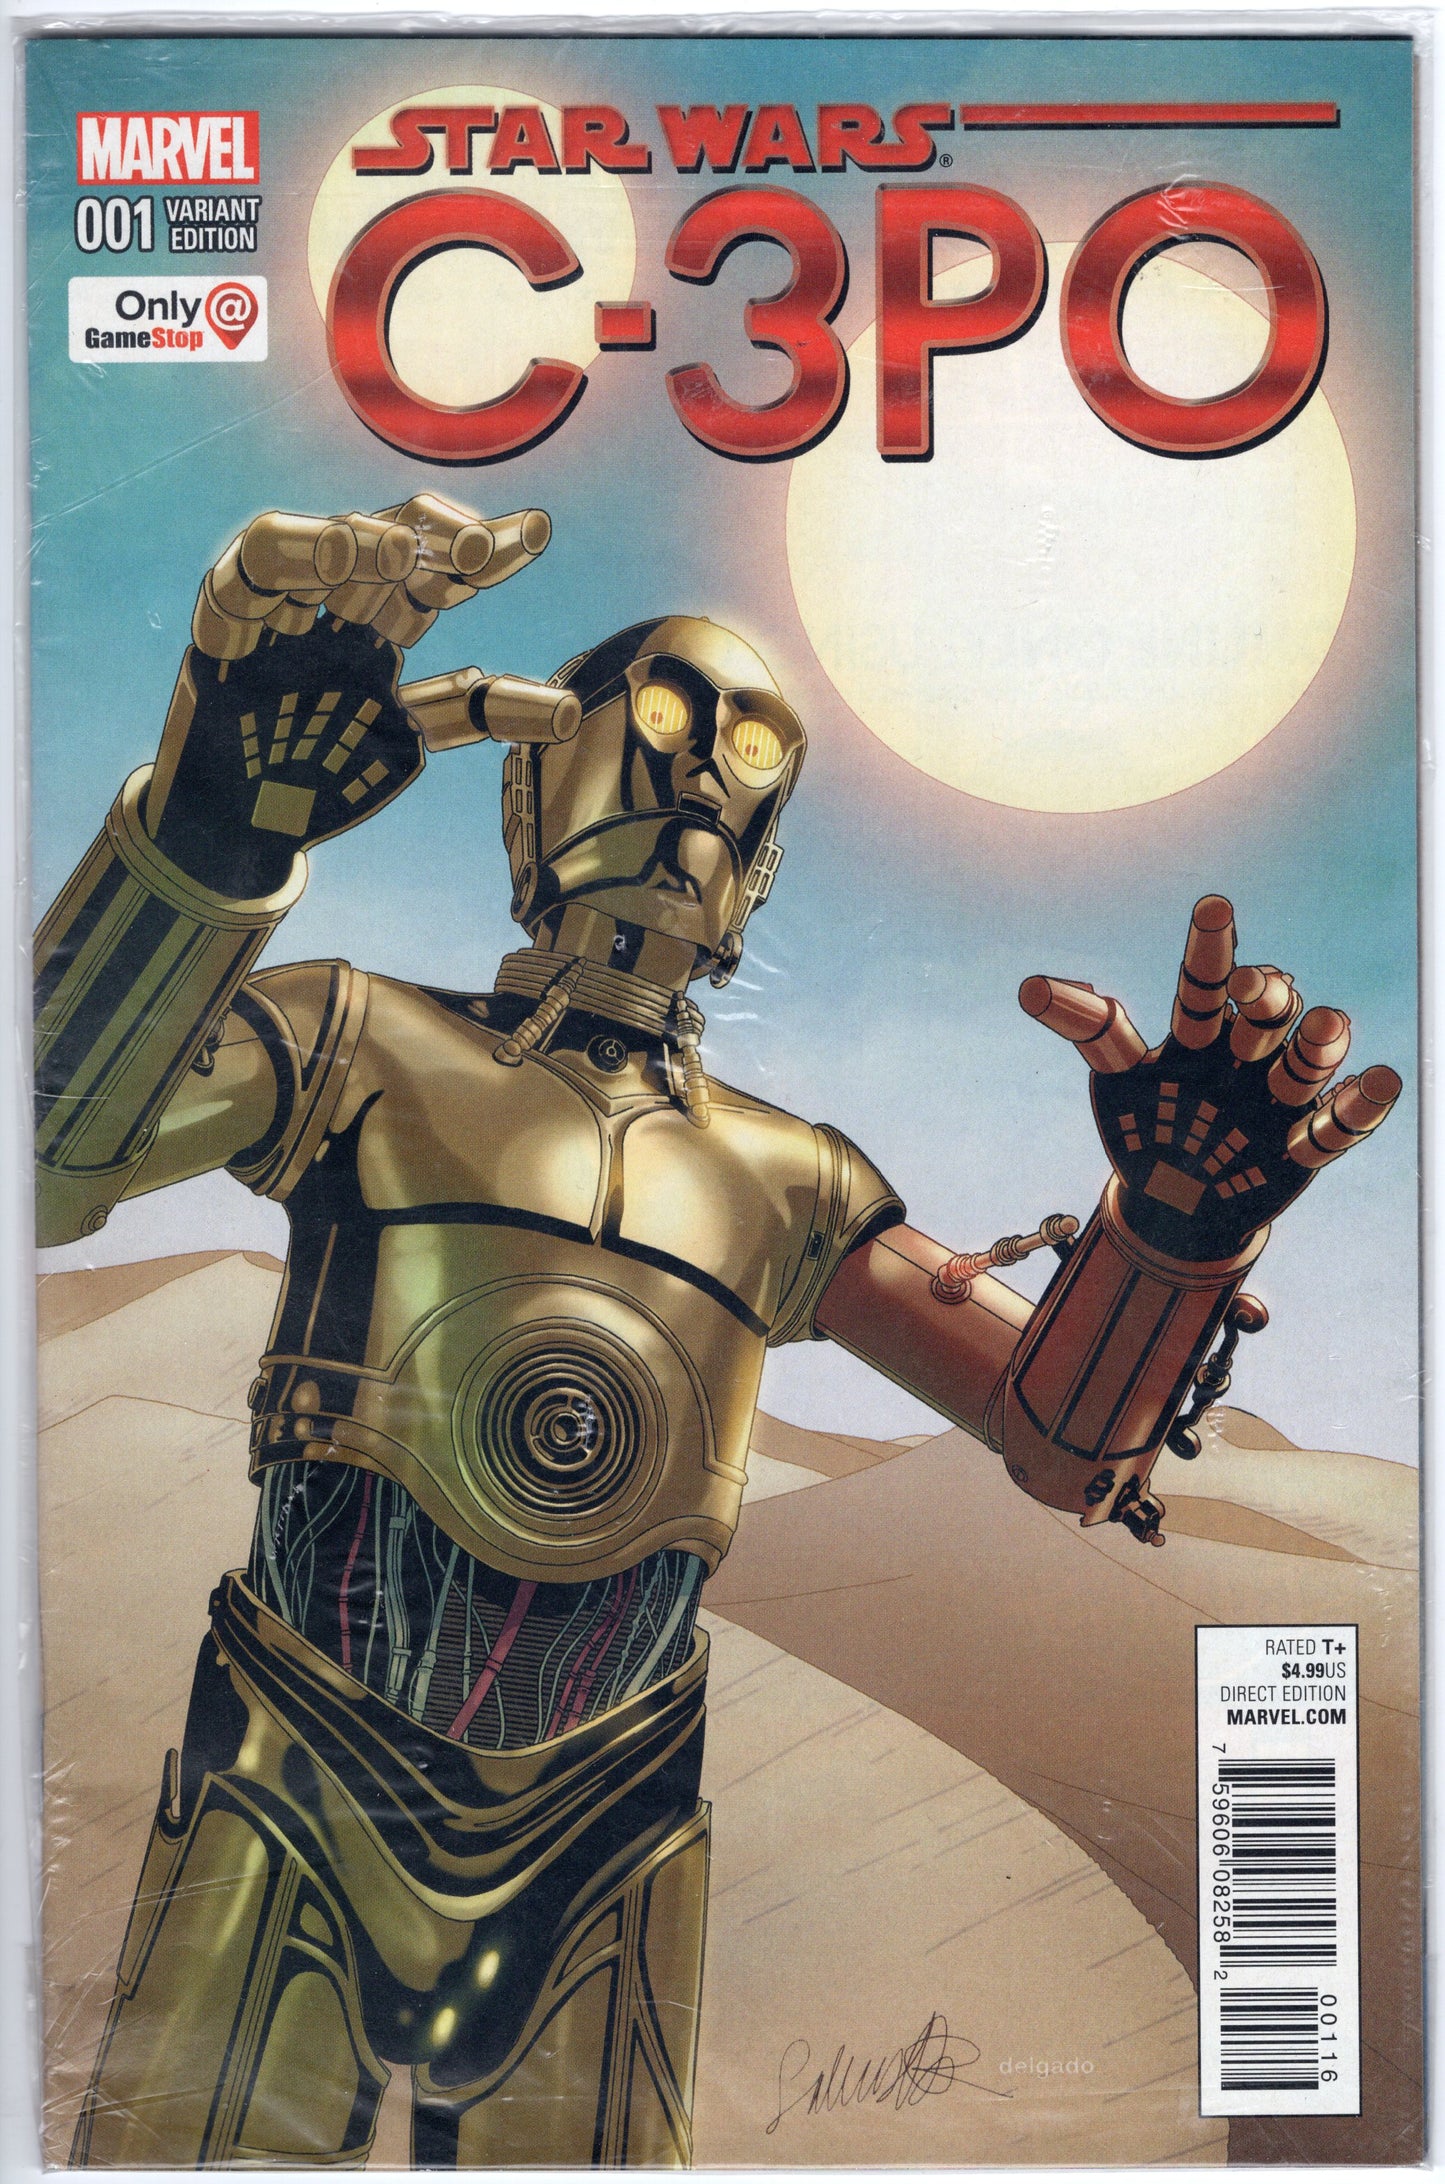 Star Wars Special: C-3PO #1 "Gamestop Exclusive" Polybag Sealed! (June, 2016 - Marvel Comics) NM